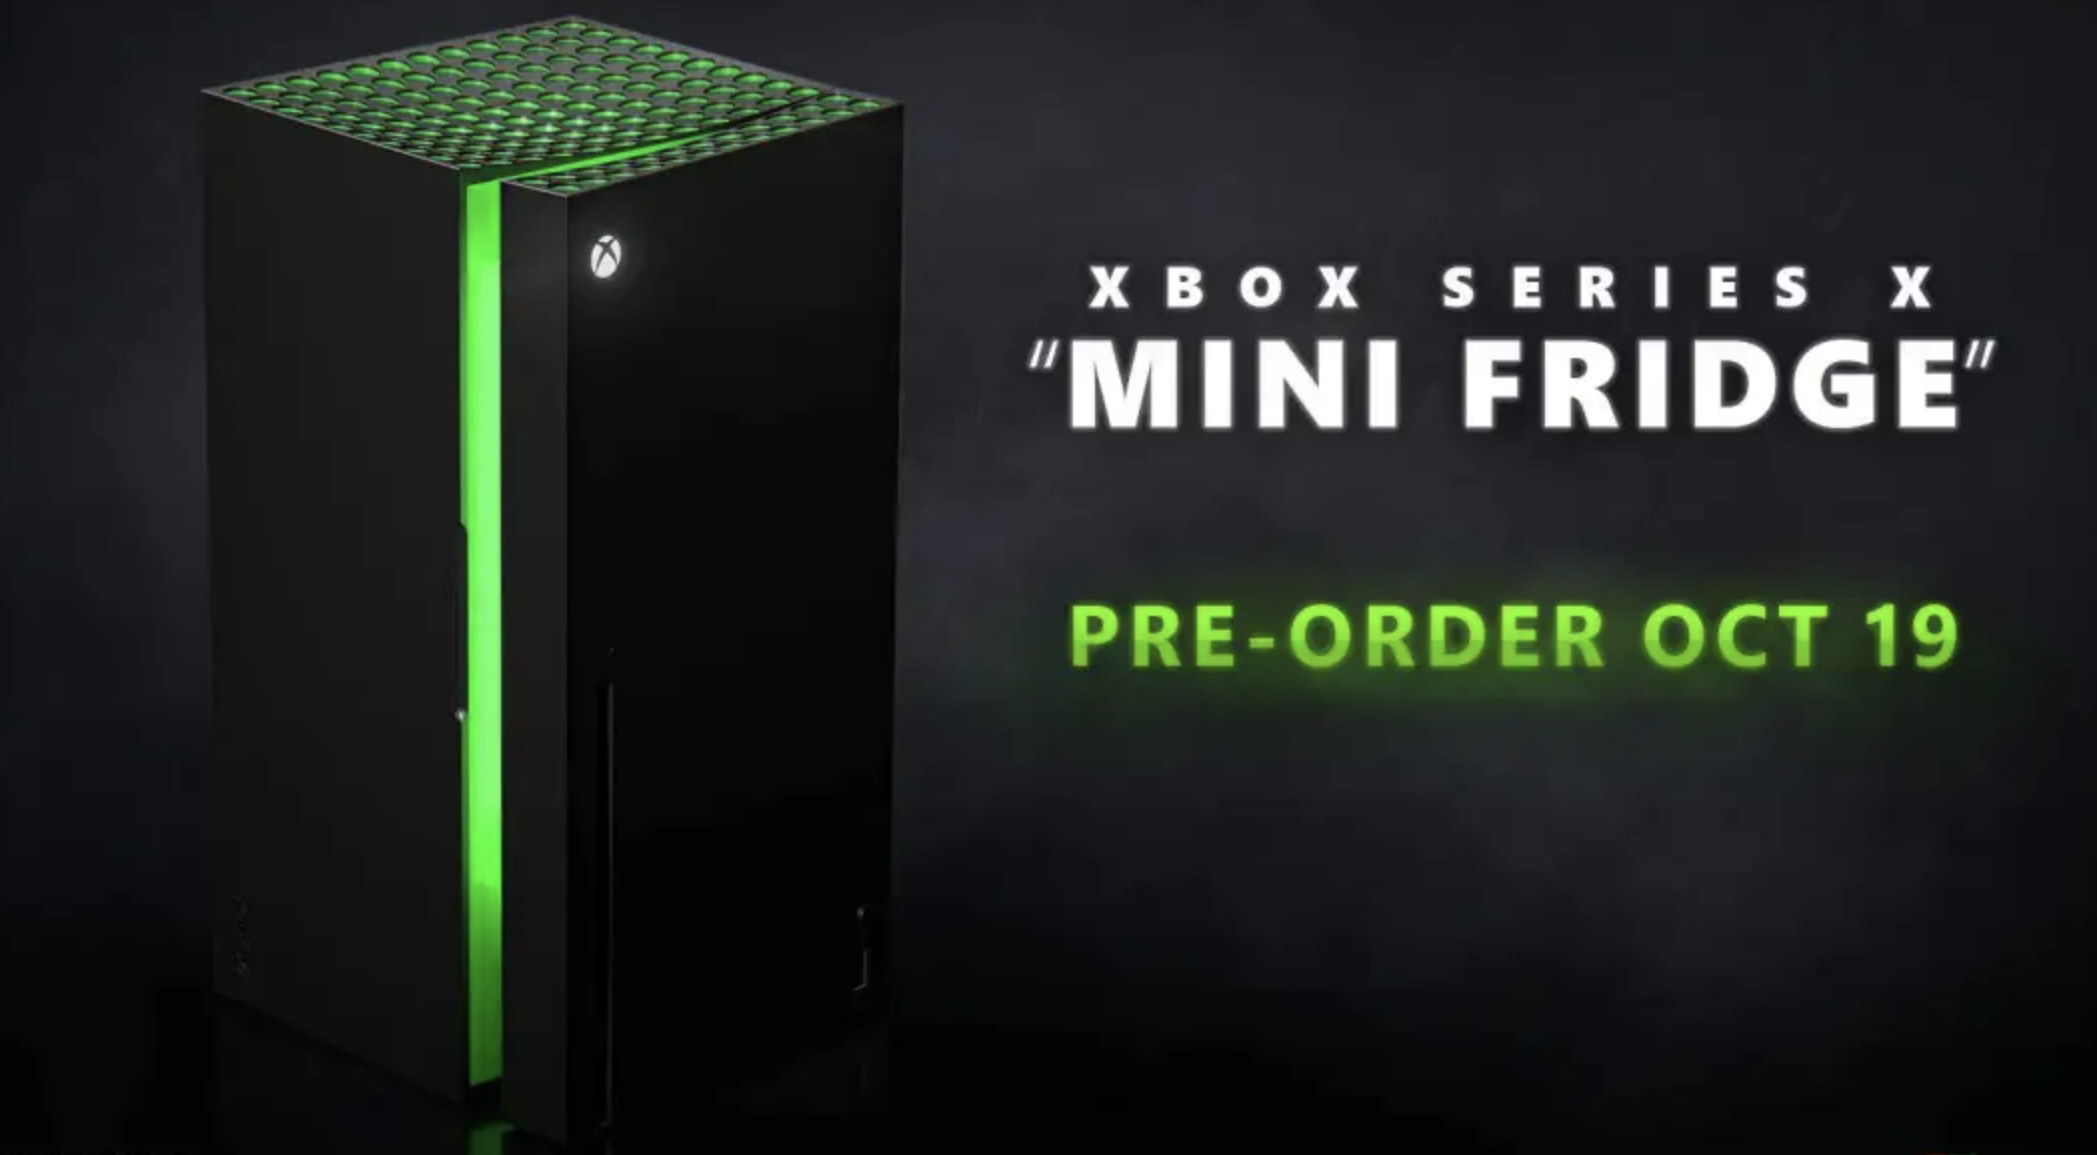 Xbox series x холодильник. Хbоx Sеriеs Mini-Fridge. Xbox Mini Fridge. Холодильник Microsoft Xbox.